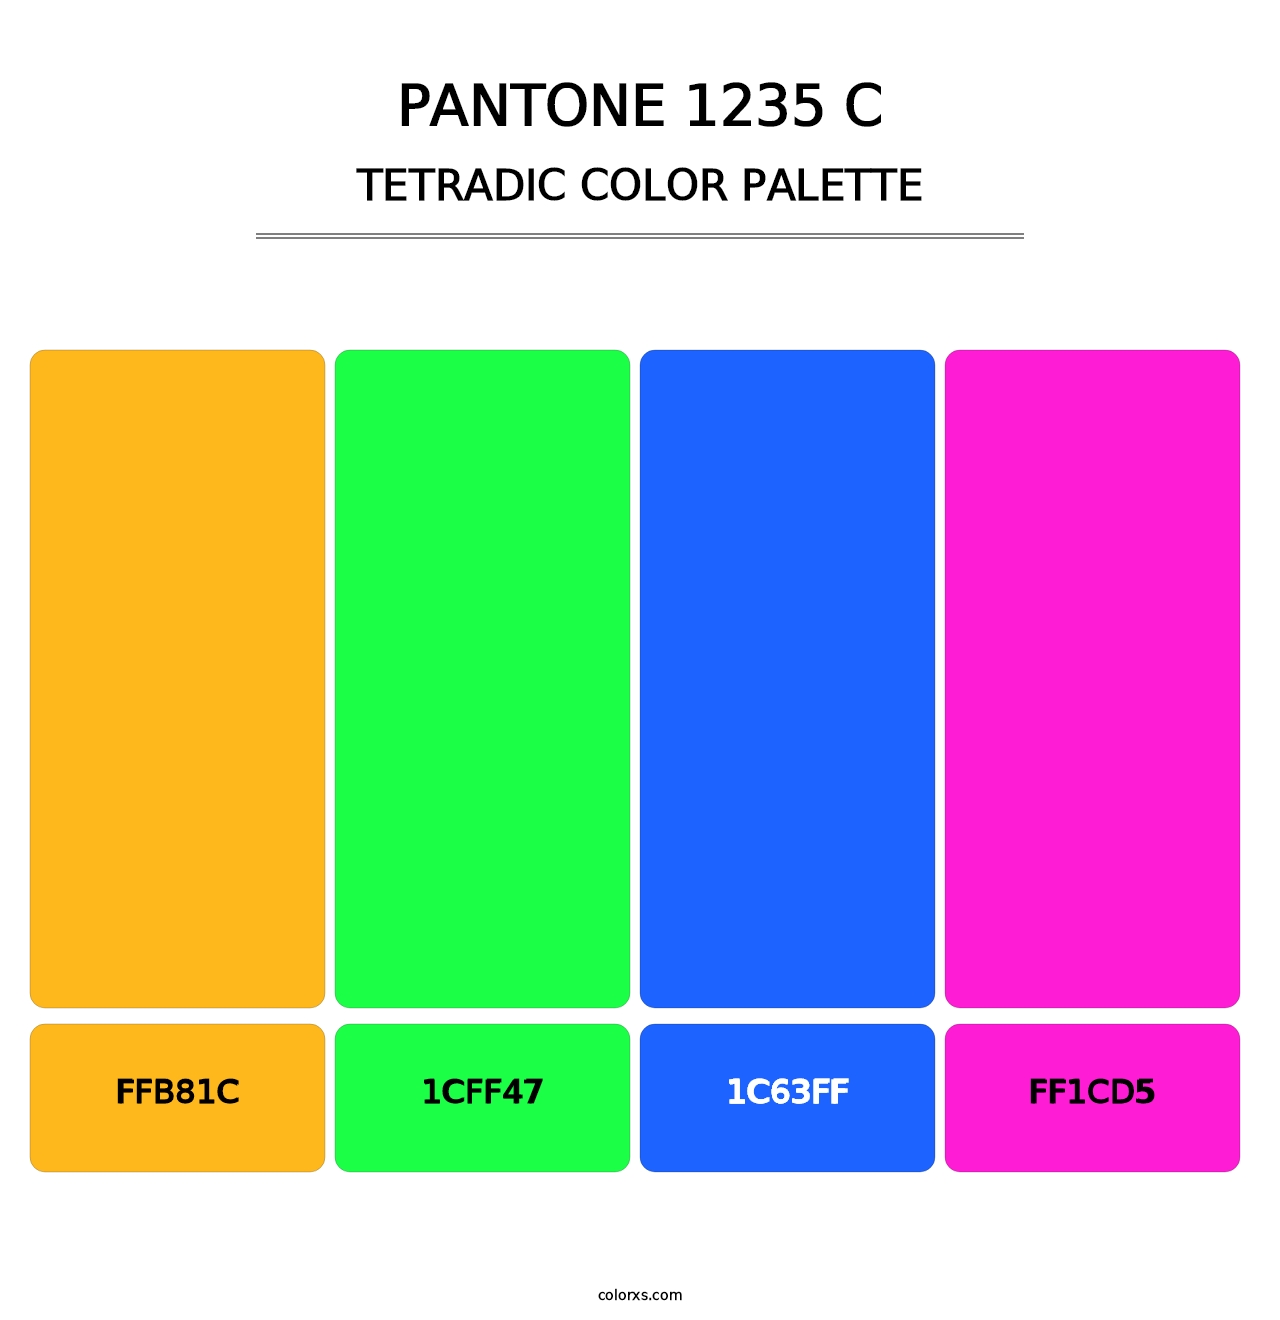 PANTONE 1235 C - Tetradic Color Palette